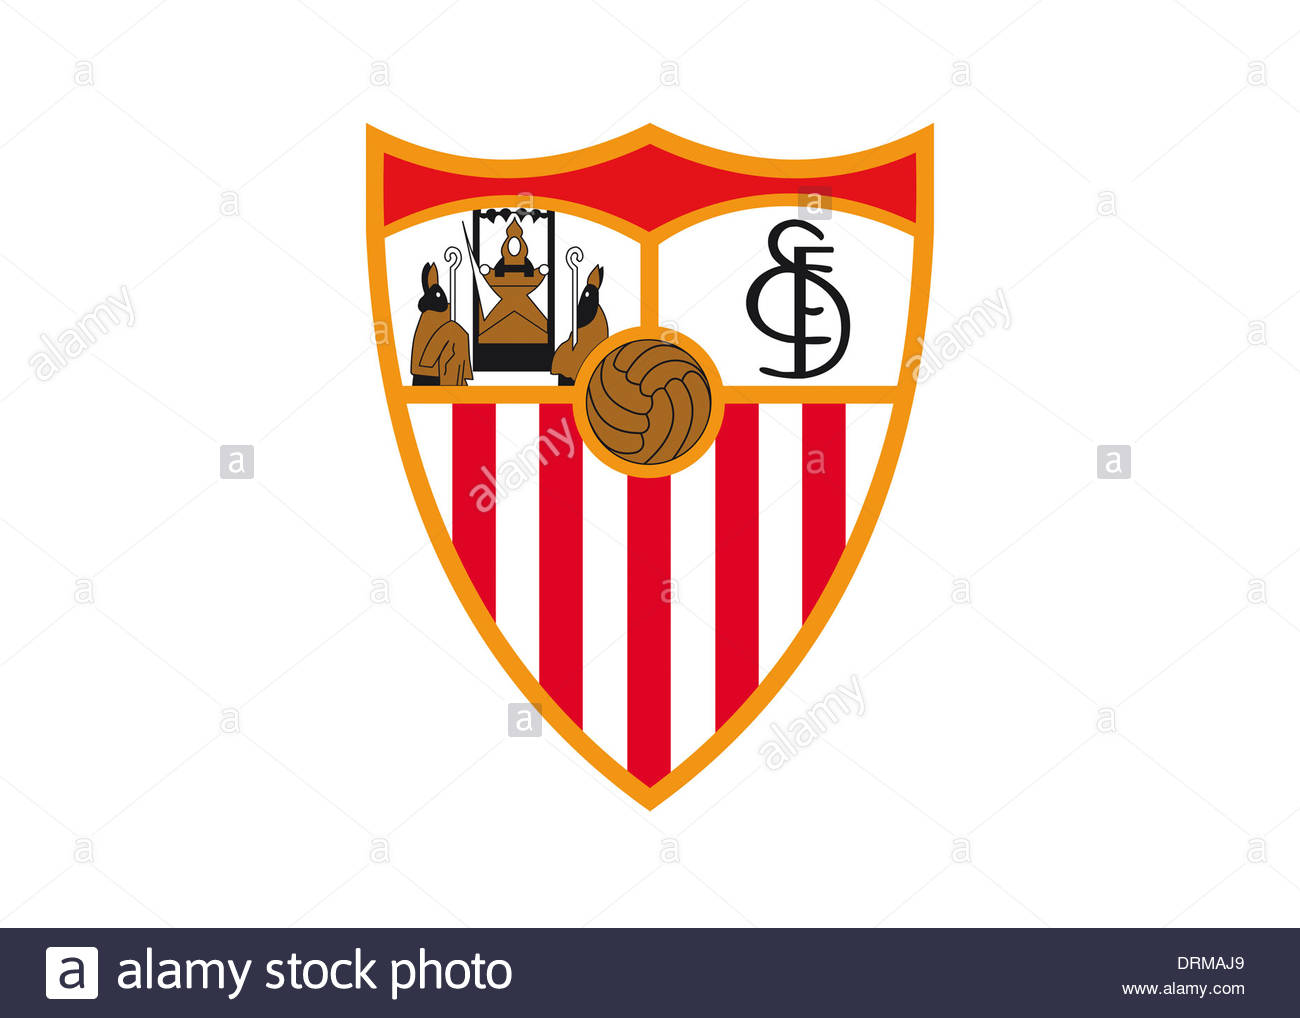 Sevilla FC logo flag symbol icon emblem Stock Photo ...